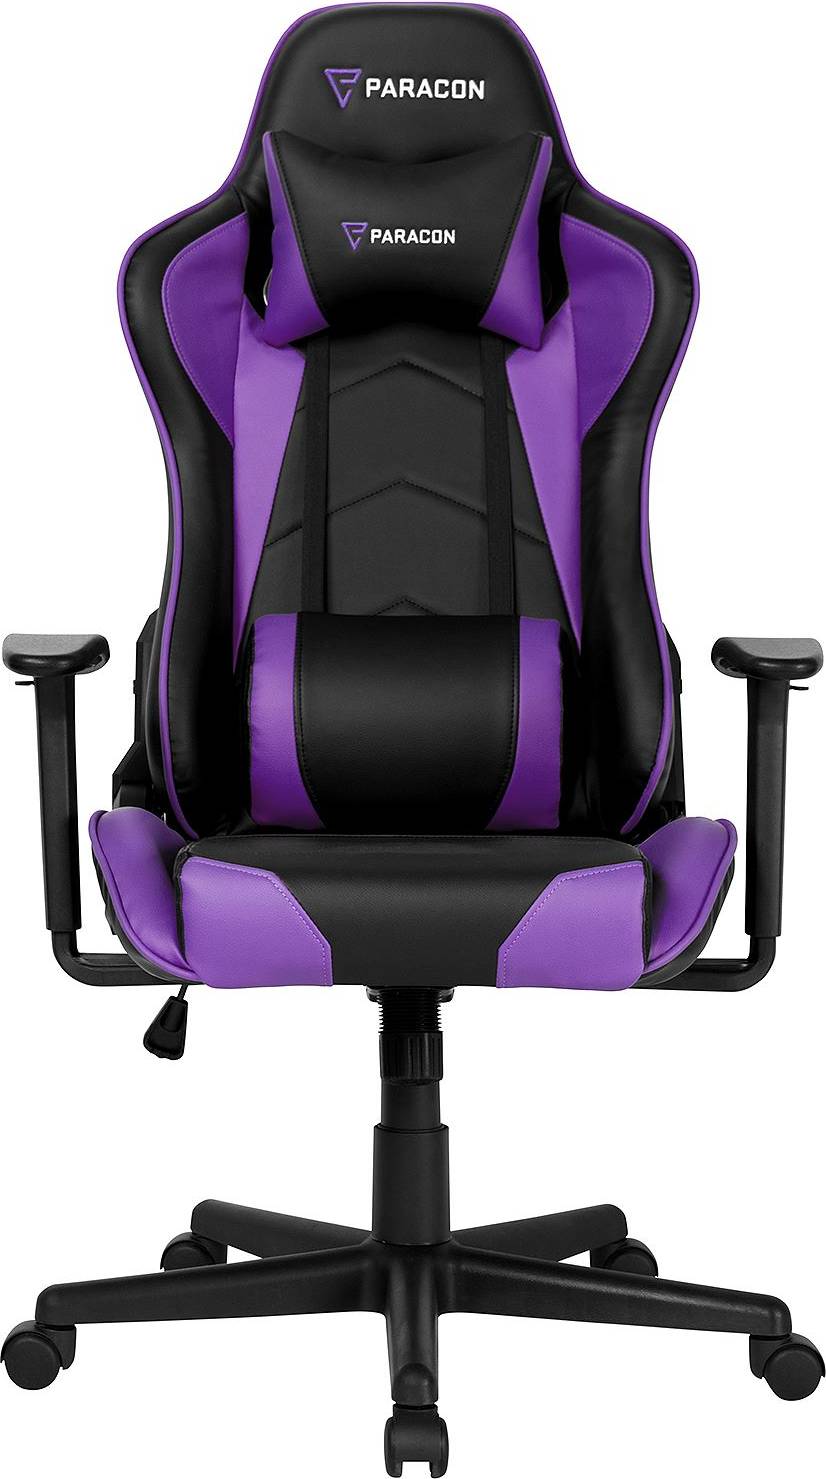  Bild på Paracon Brawler Gaming Chair - Black/Purple gamingstol